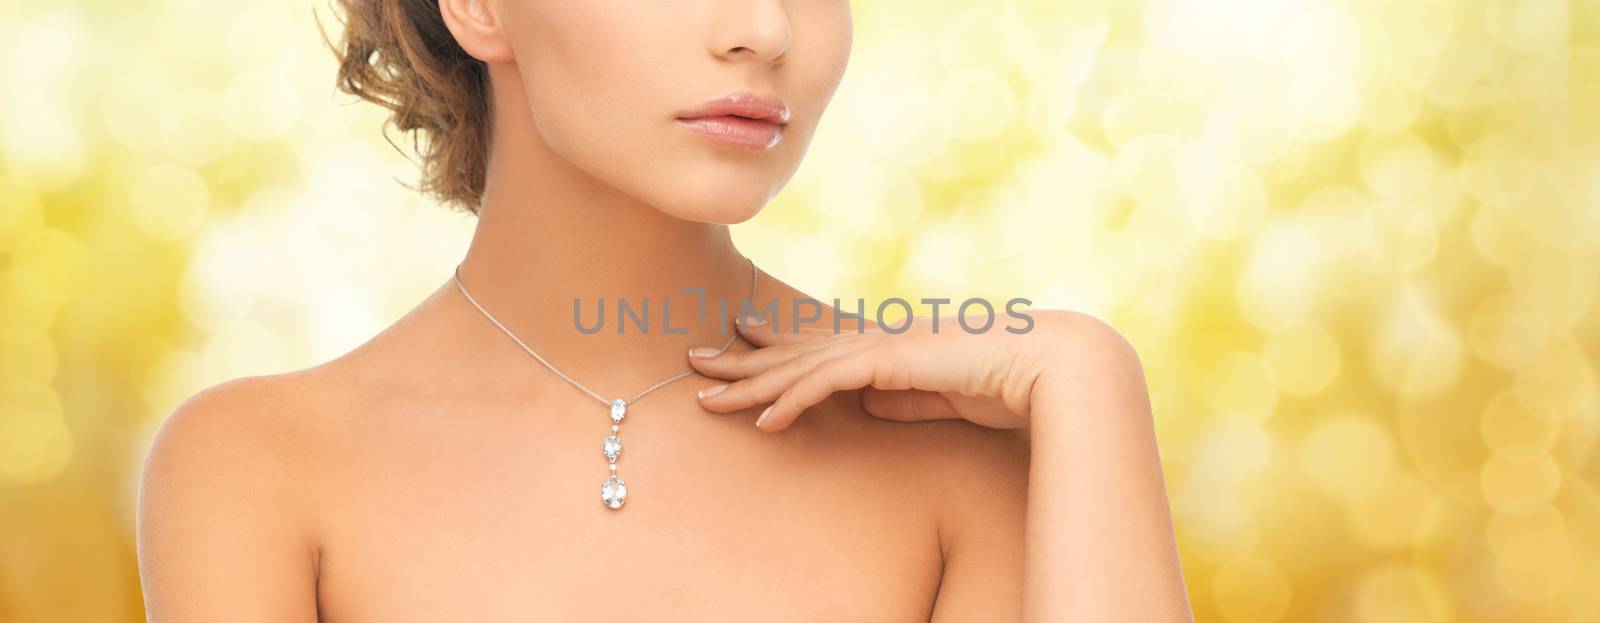 woman wearing shiny diamond pendant by dolgachov